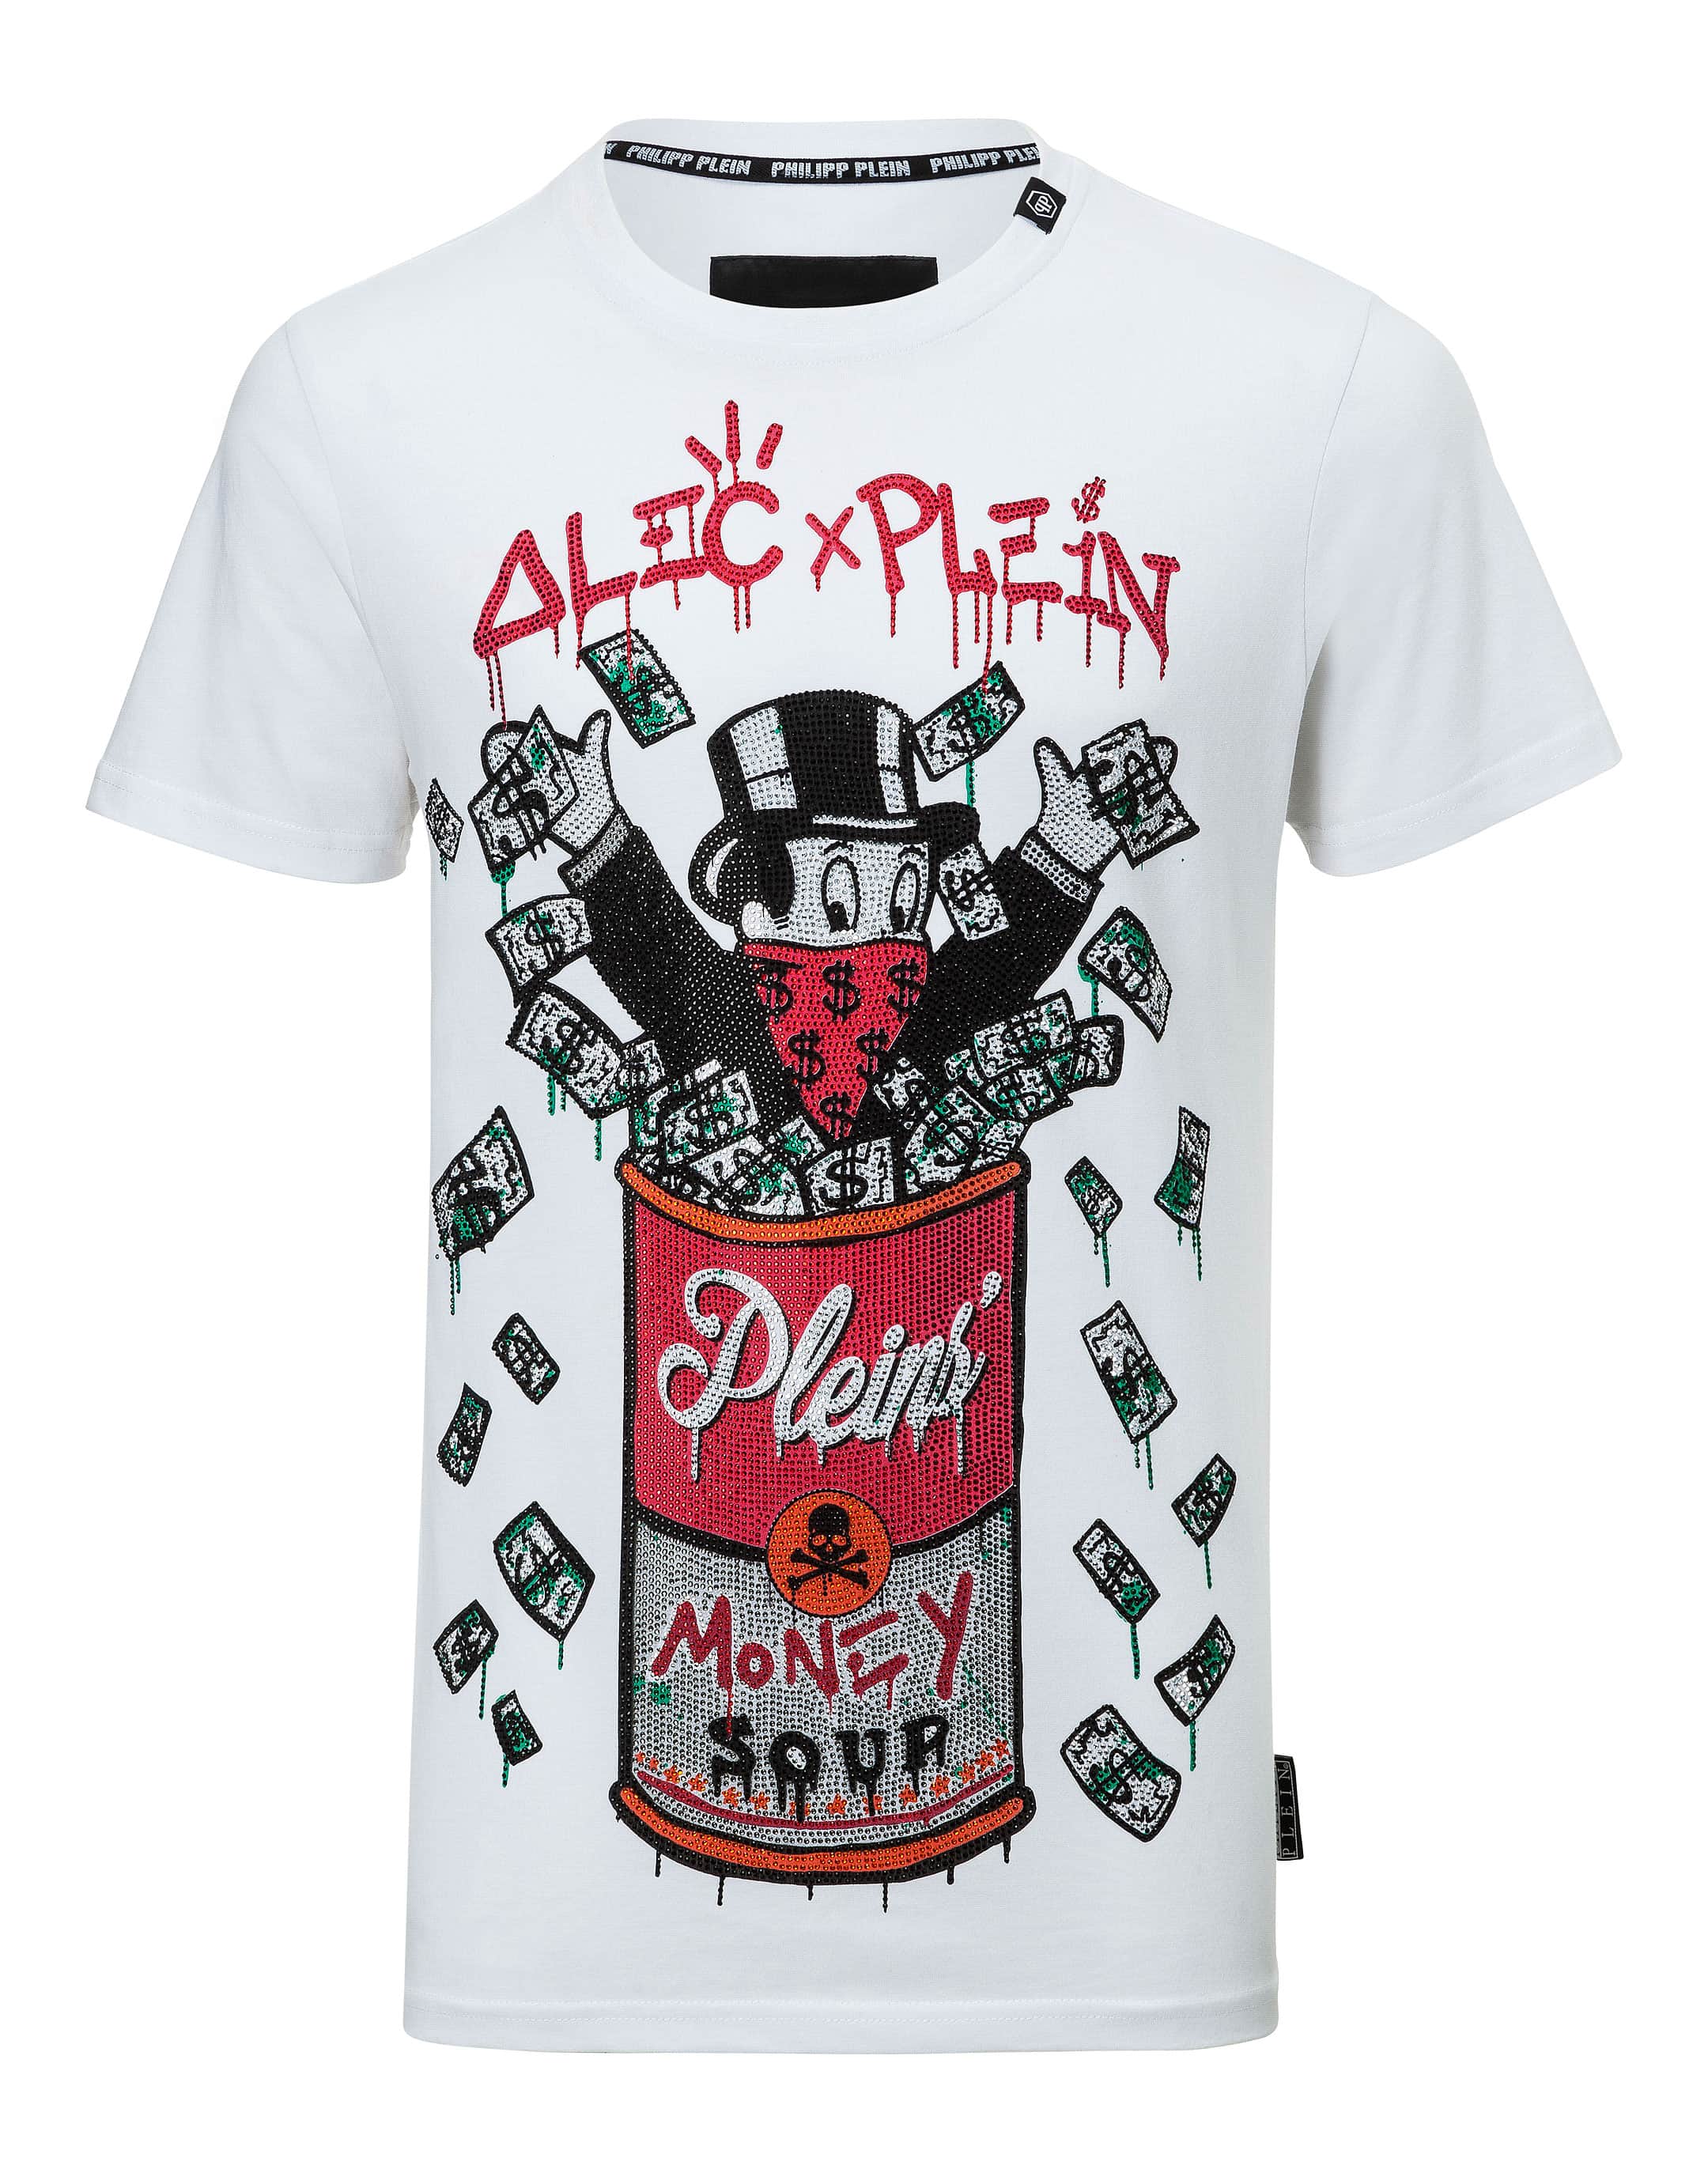 philipp plein alec monopoly shirt